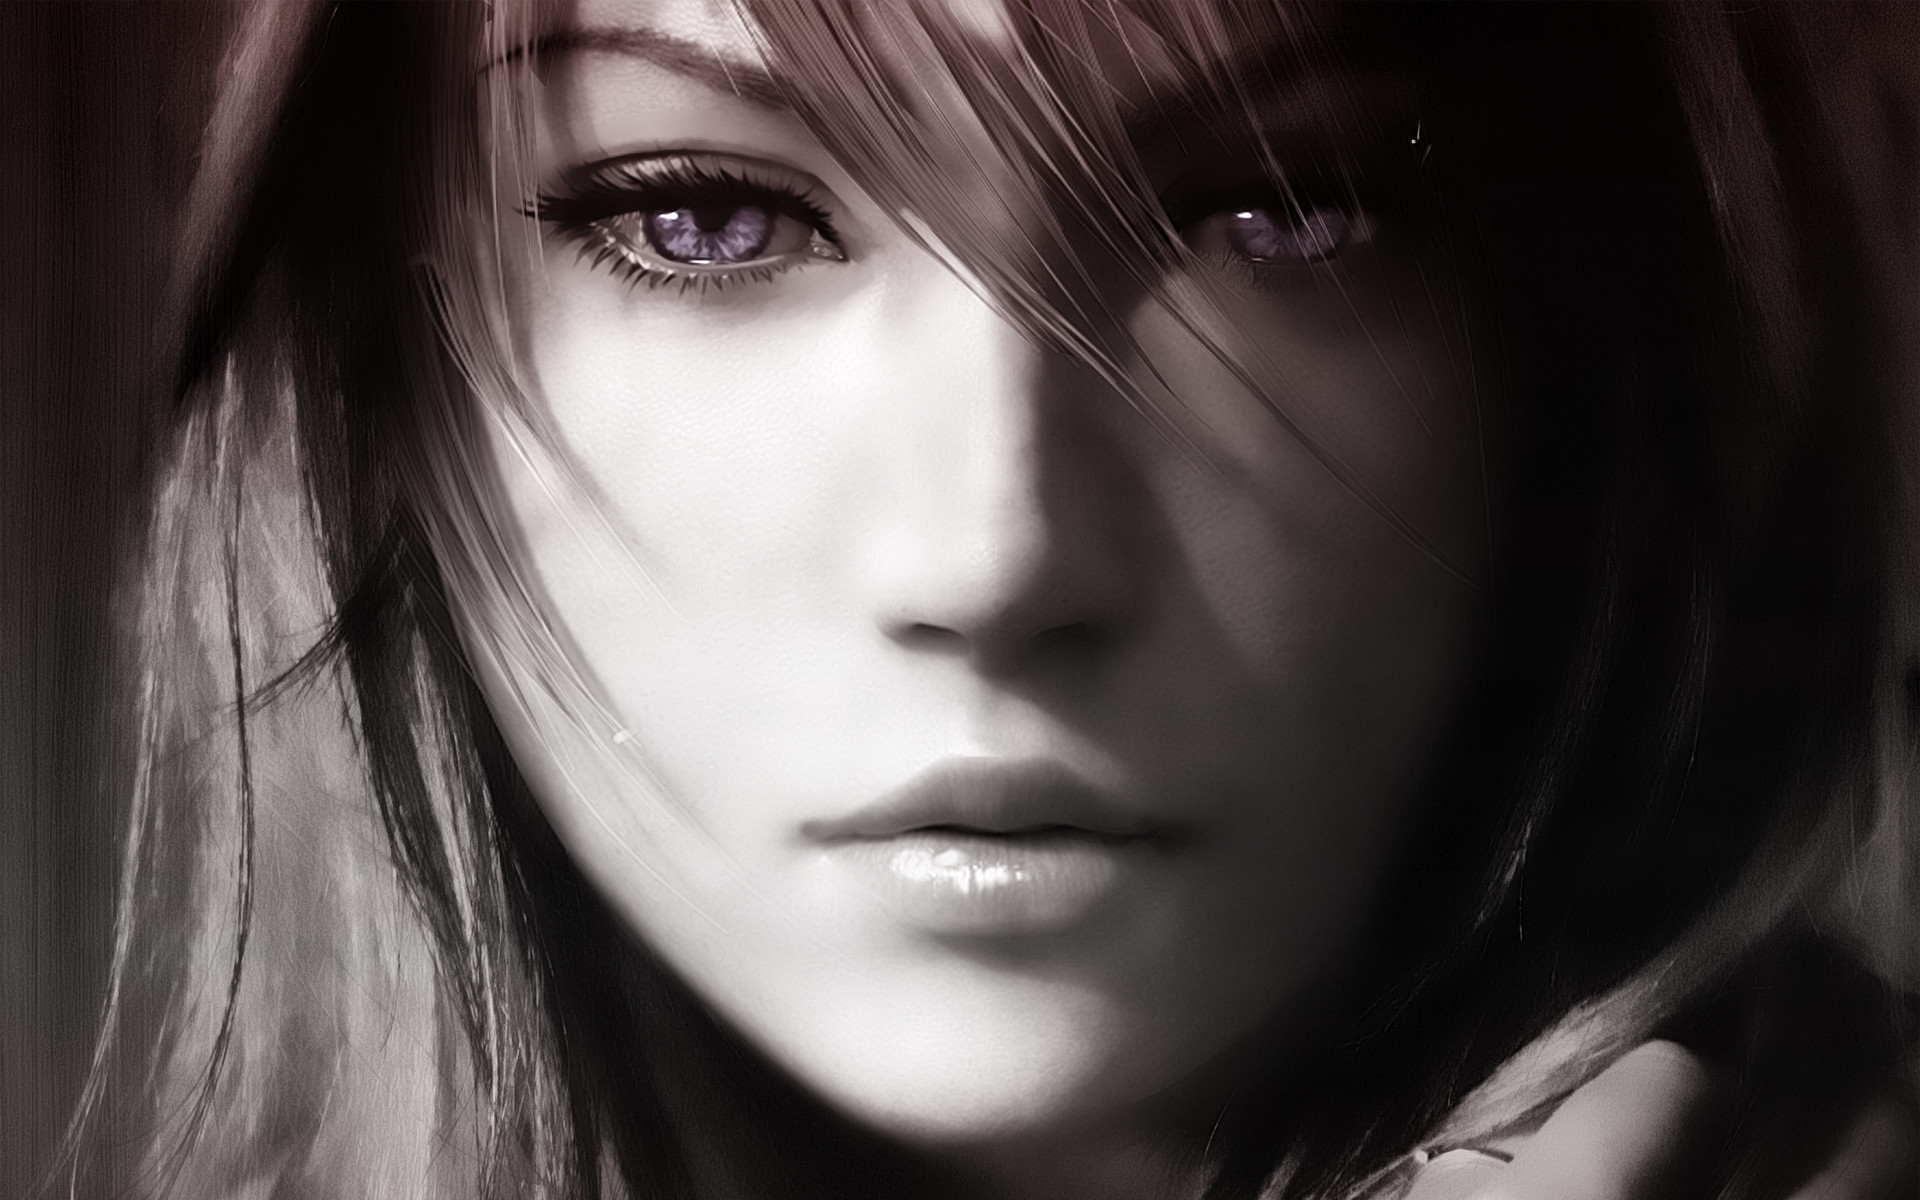 Women close up CGI Final Fantasy XIII artwork realistic Claire Farron drawn faces / Wallpaper